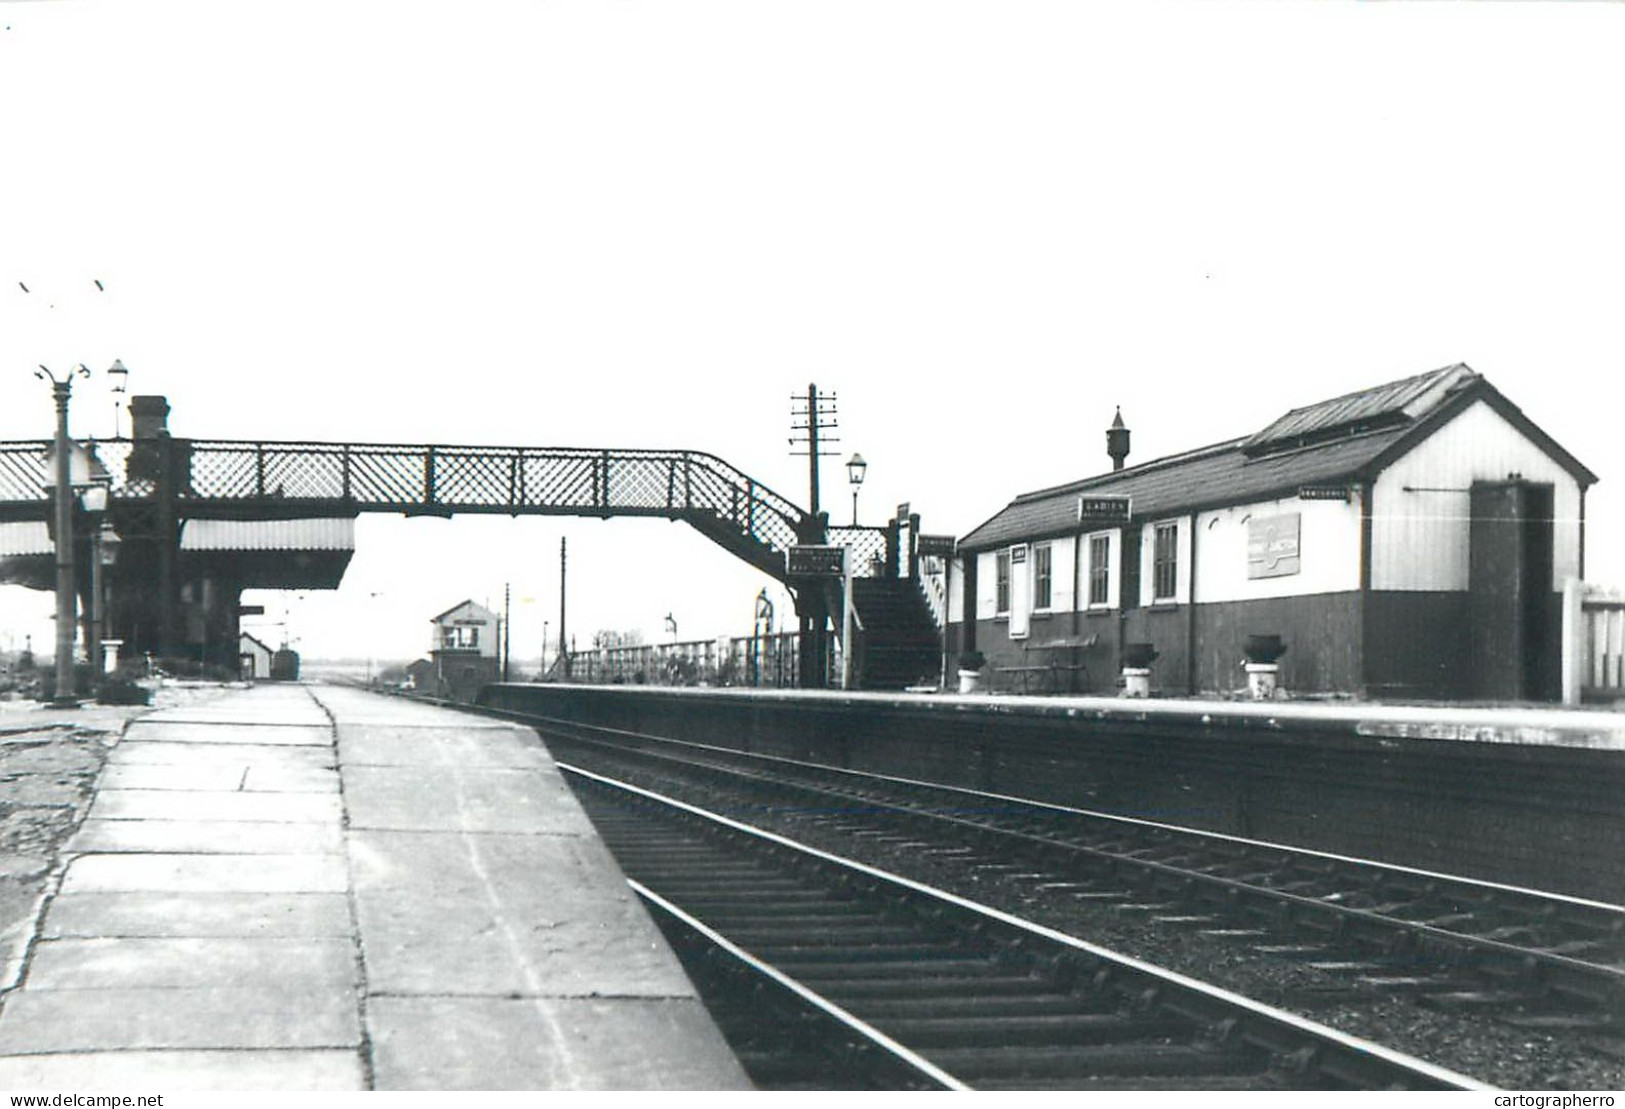 Buckinghamshire Verney Junction train railway station lot of 13 photos 9 x 14 cm